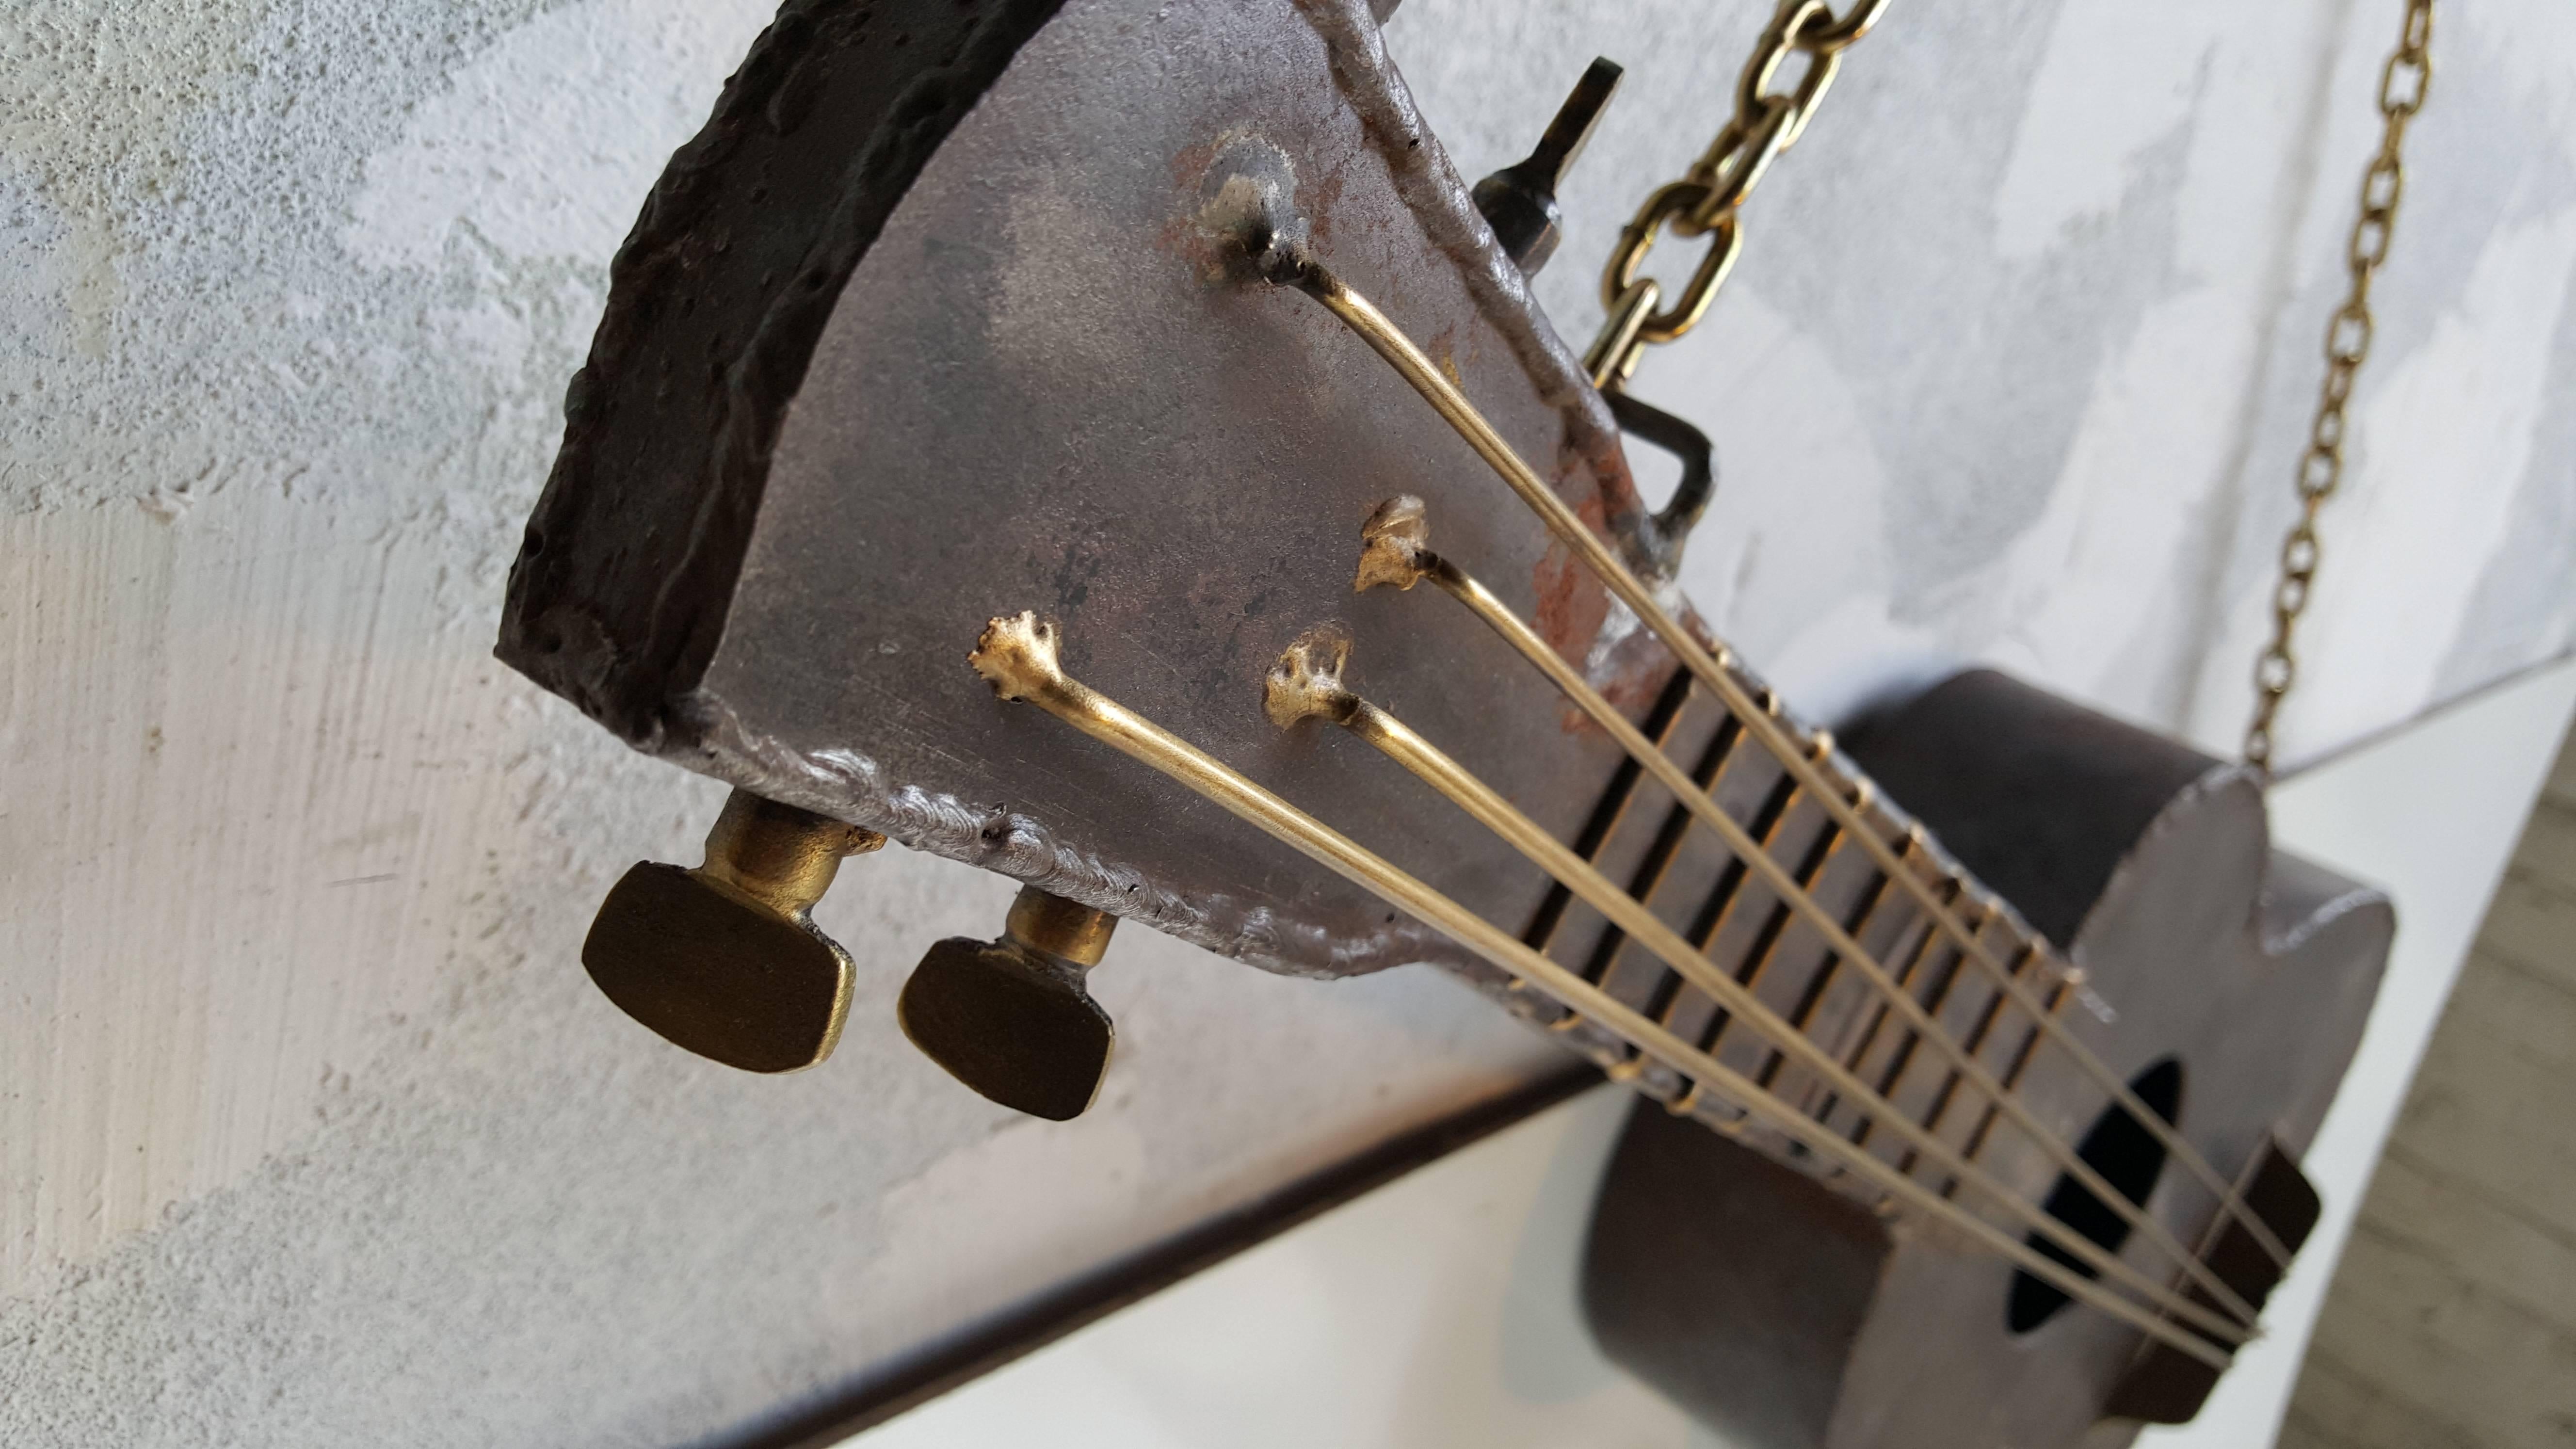 American Modernist Folk Art Metal Guitar Sculptures Whimsical Musical